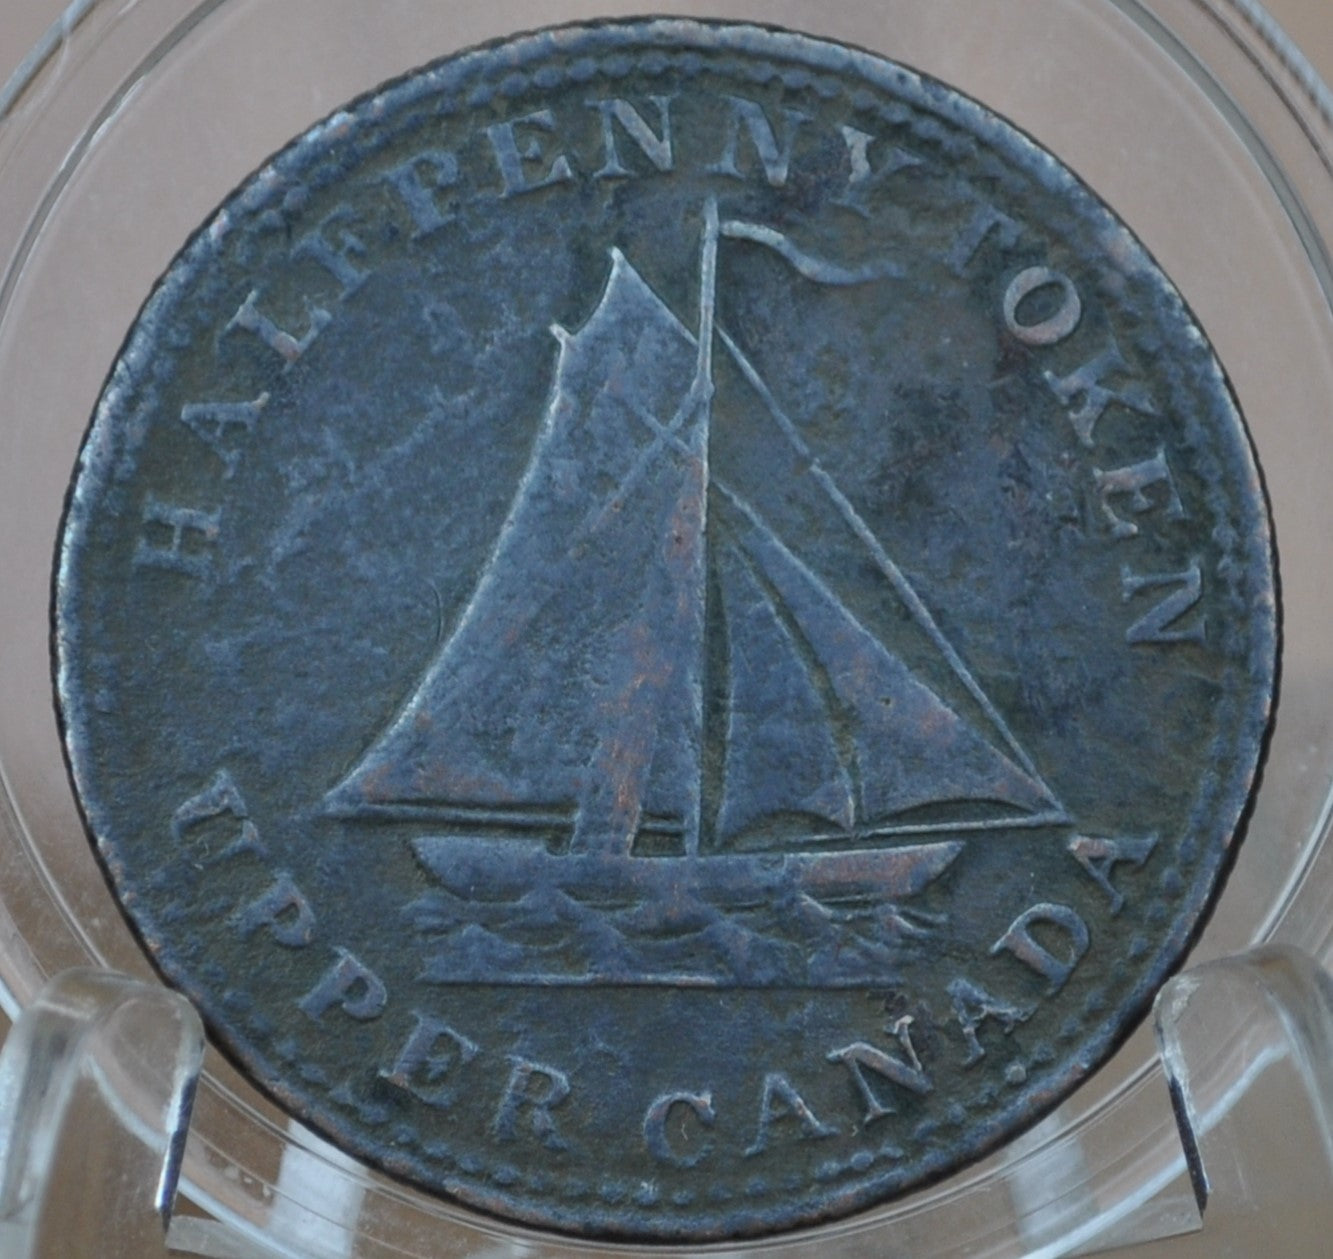 1833 Half Penny Token Upper Canada, "To Facilitate Trade" - 1/2 Penny Token Canada 1833 Canadian Token